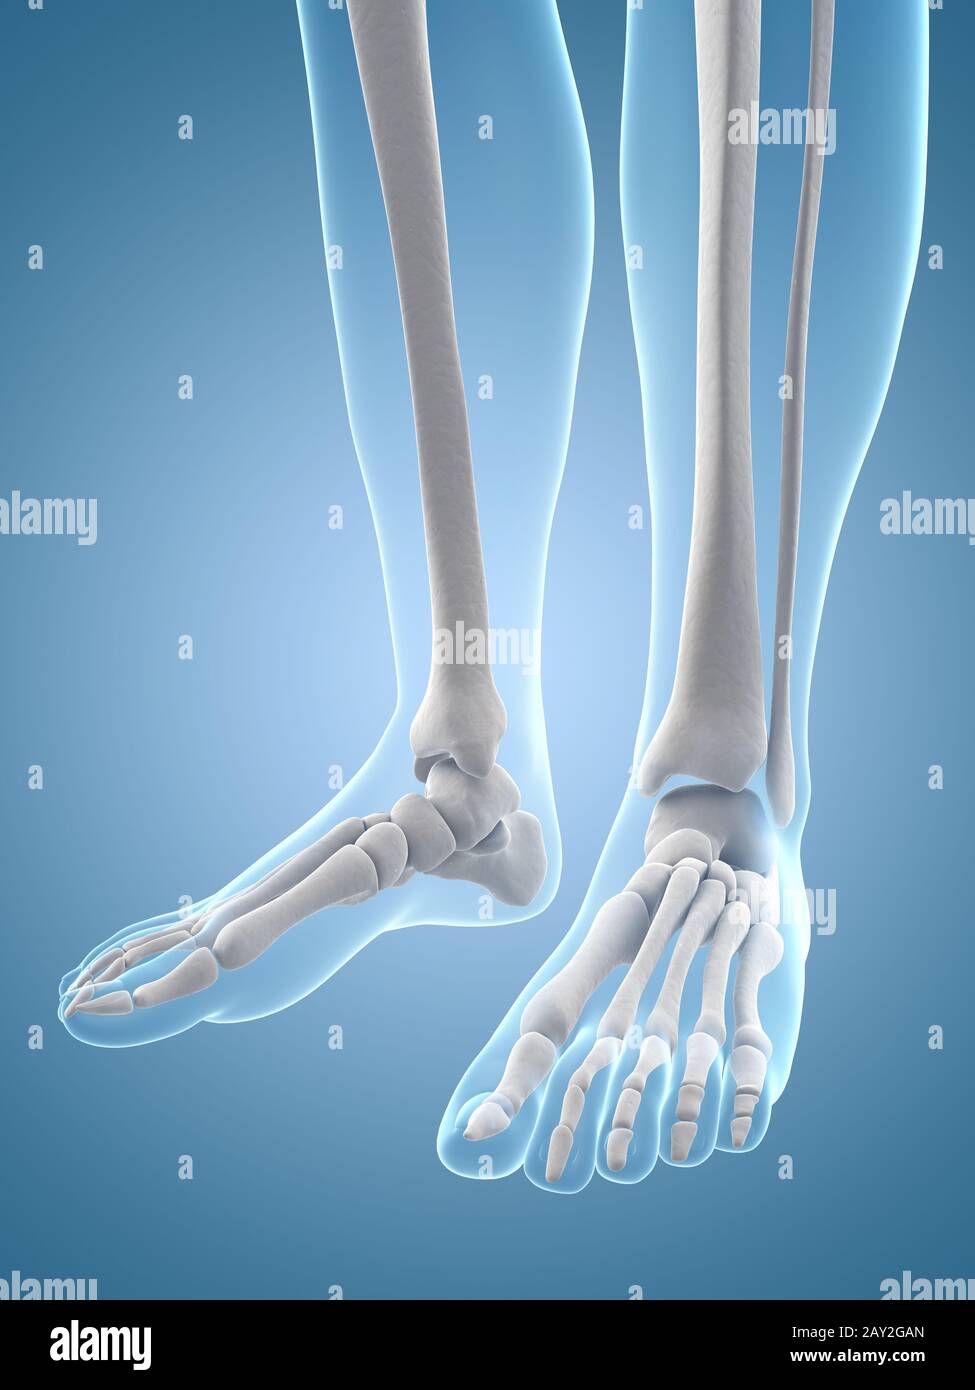 medical illustration of the foot bones Stock Photo